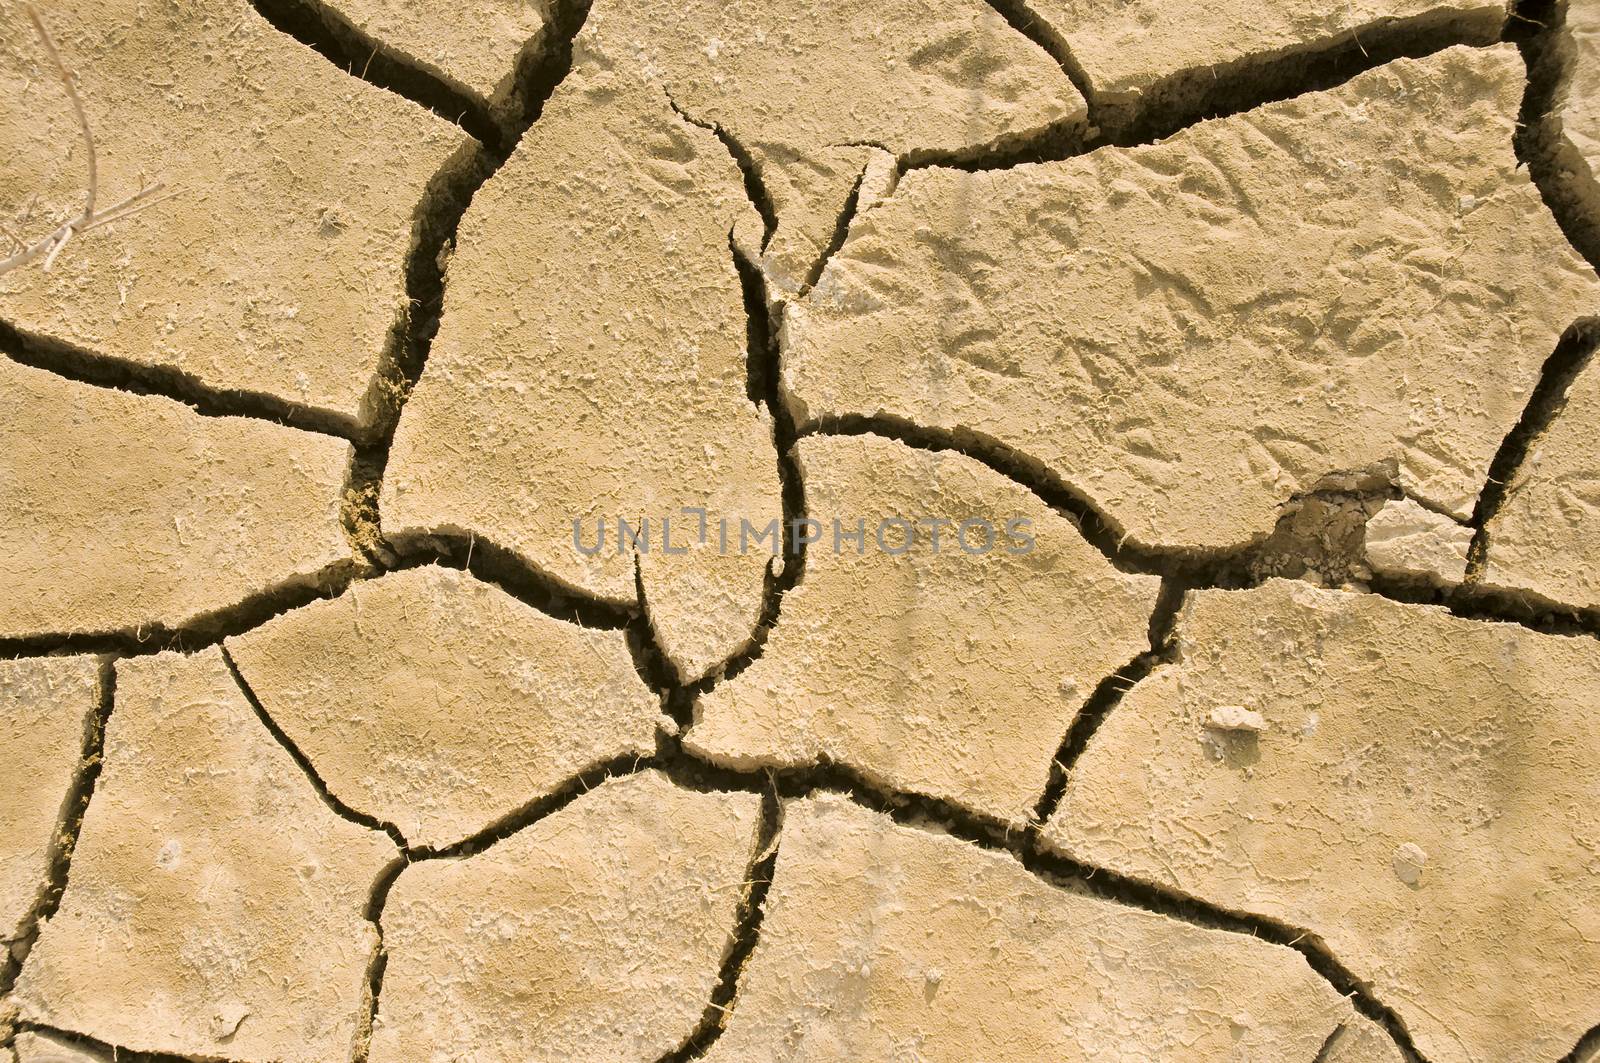 Animal footprints in dried earth
